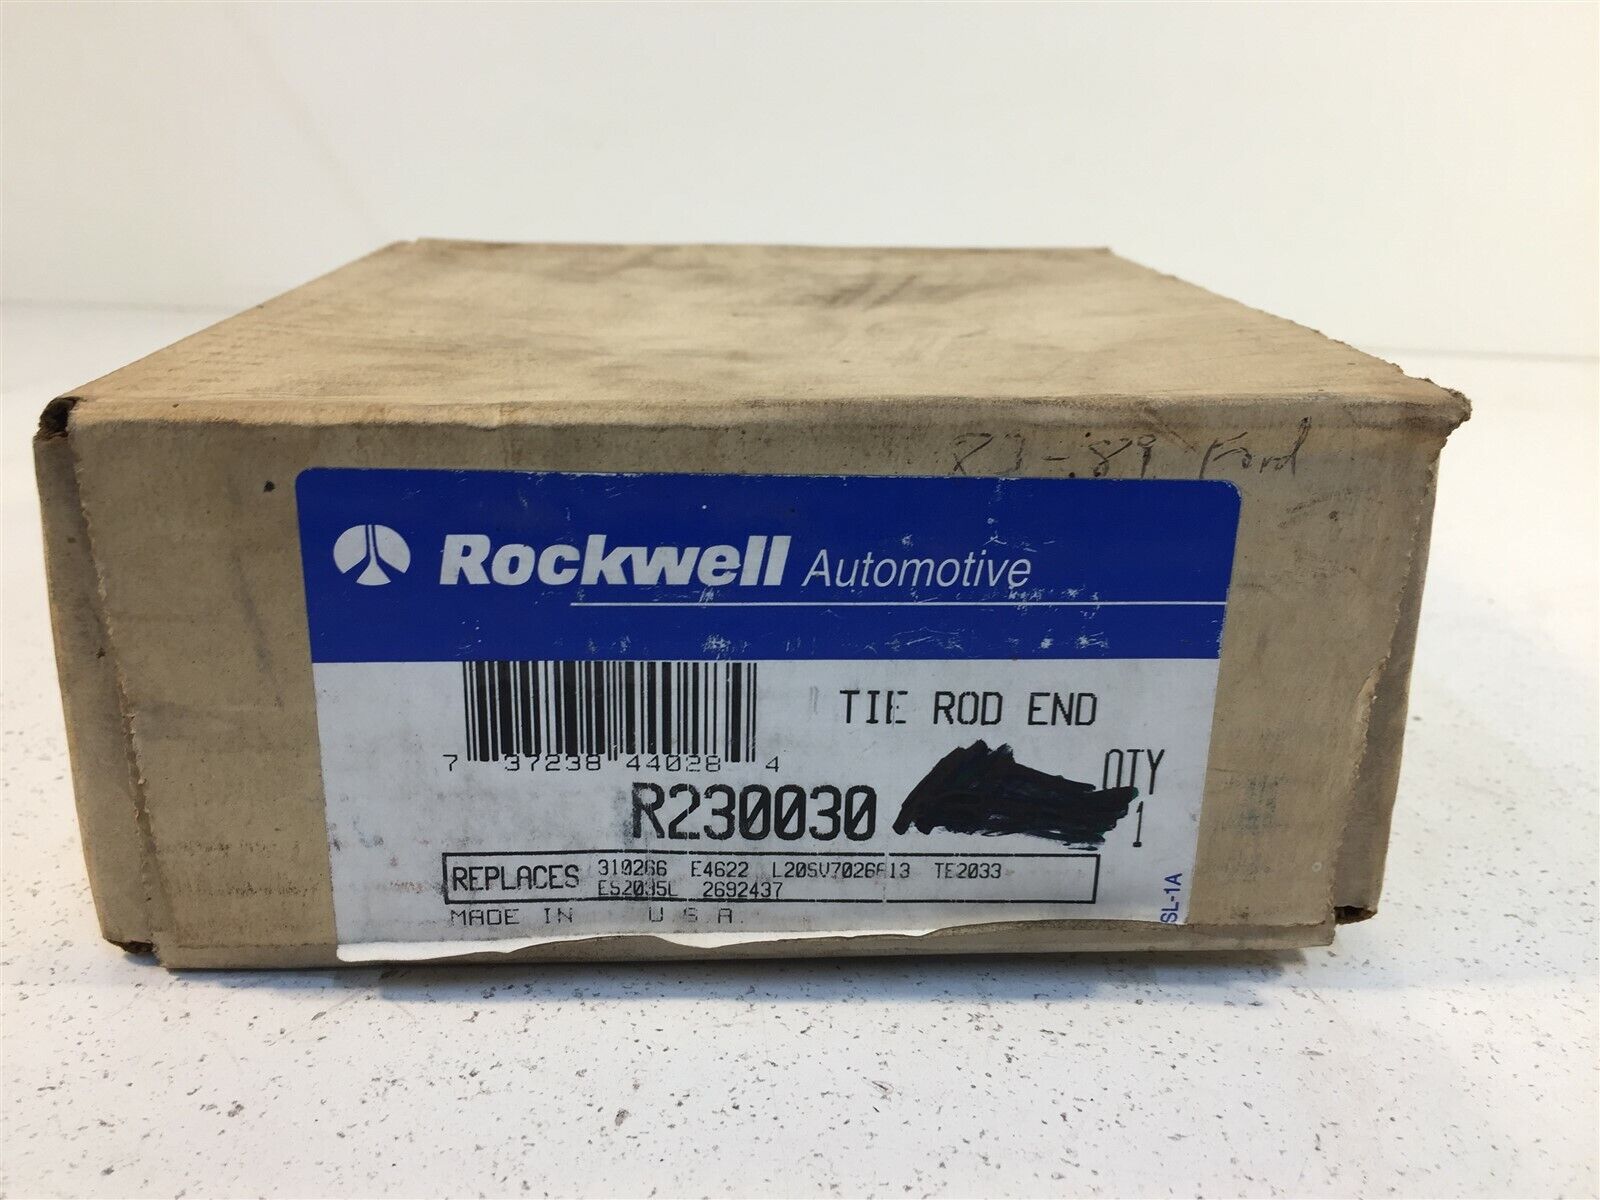 Rockwell Automotive R230030 Tie Rod End